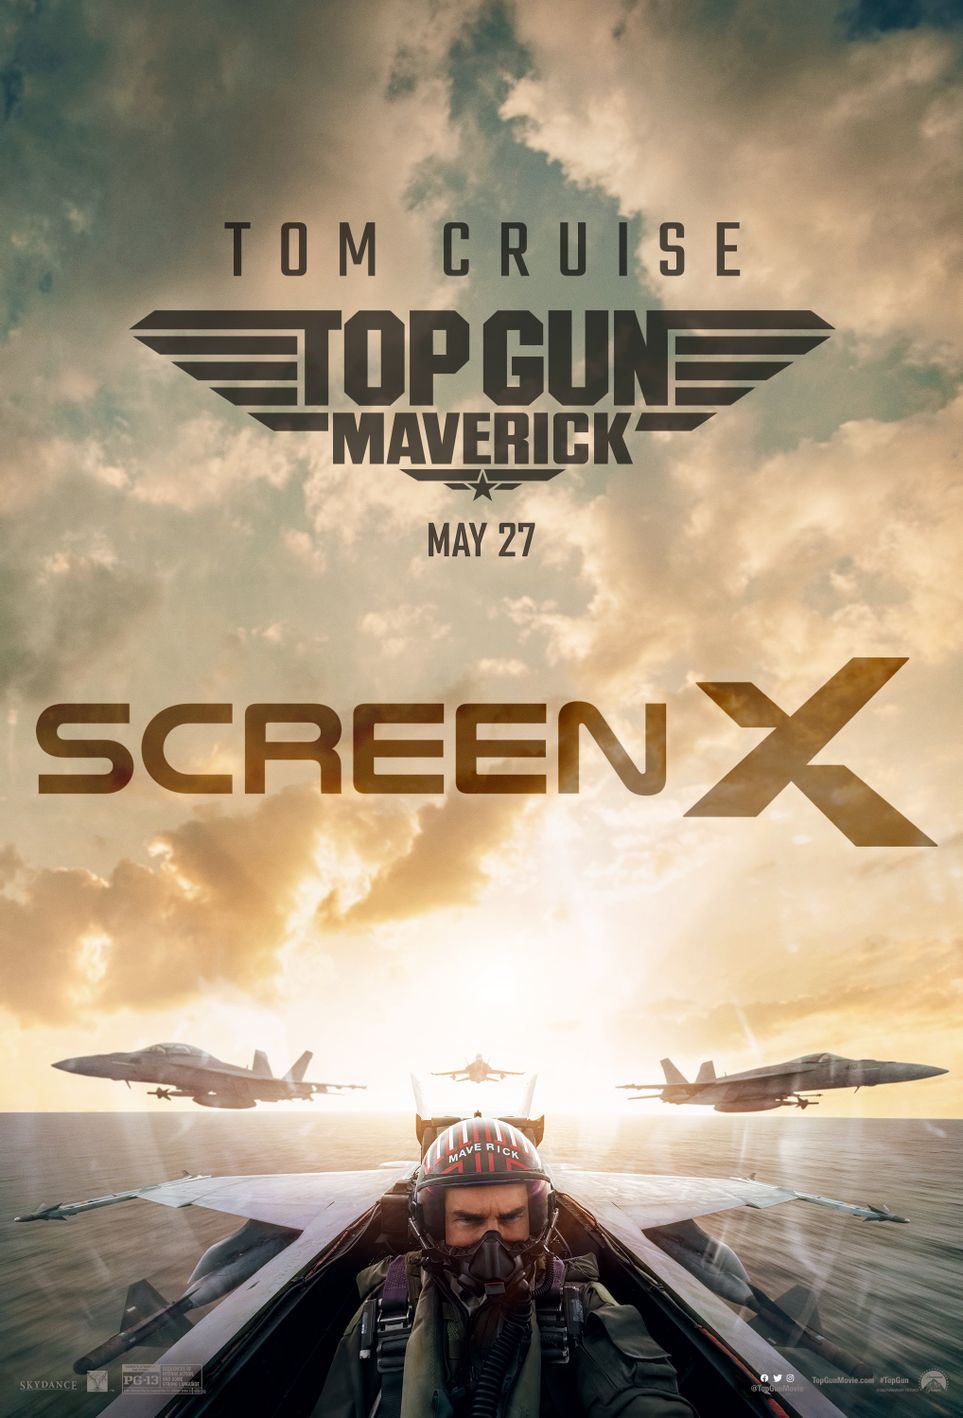 Tom Cruise's Maverick Returns to Action in New Top Gun 2 Image